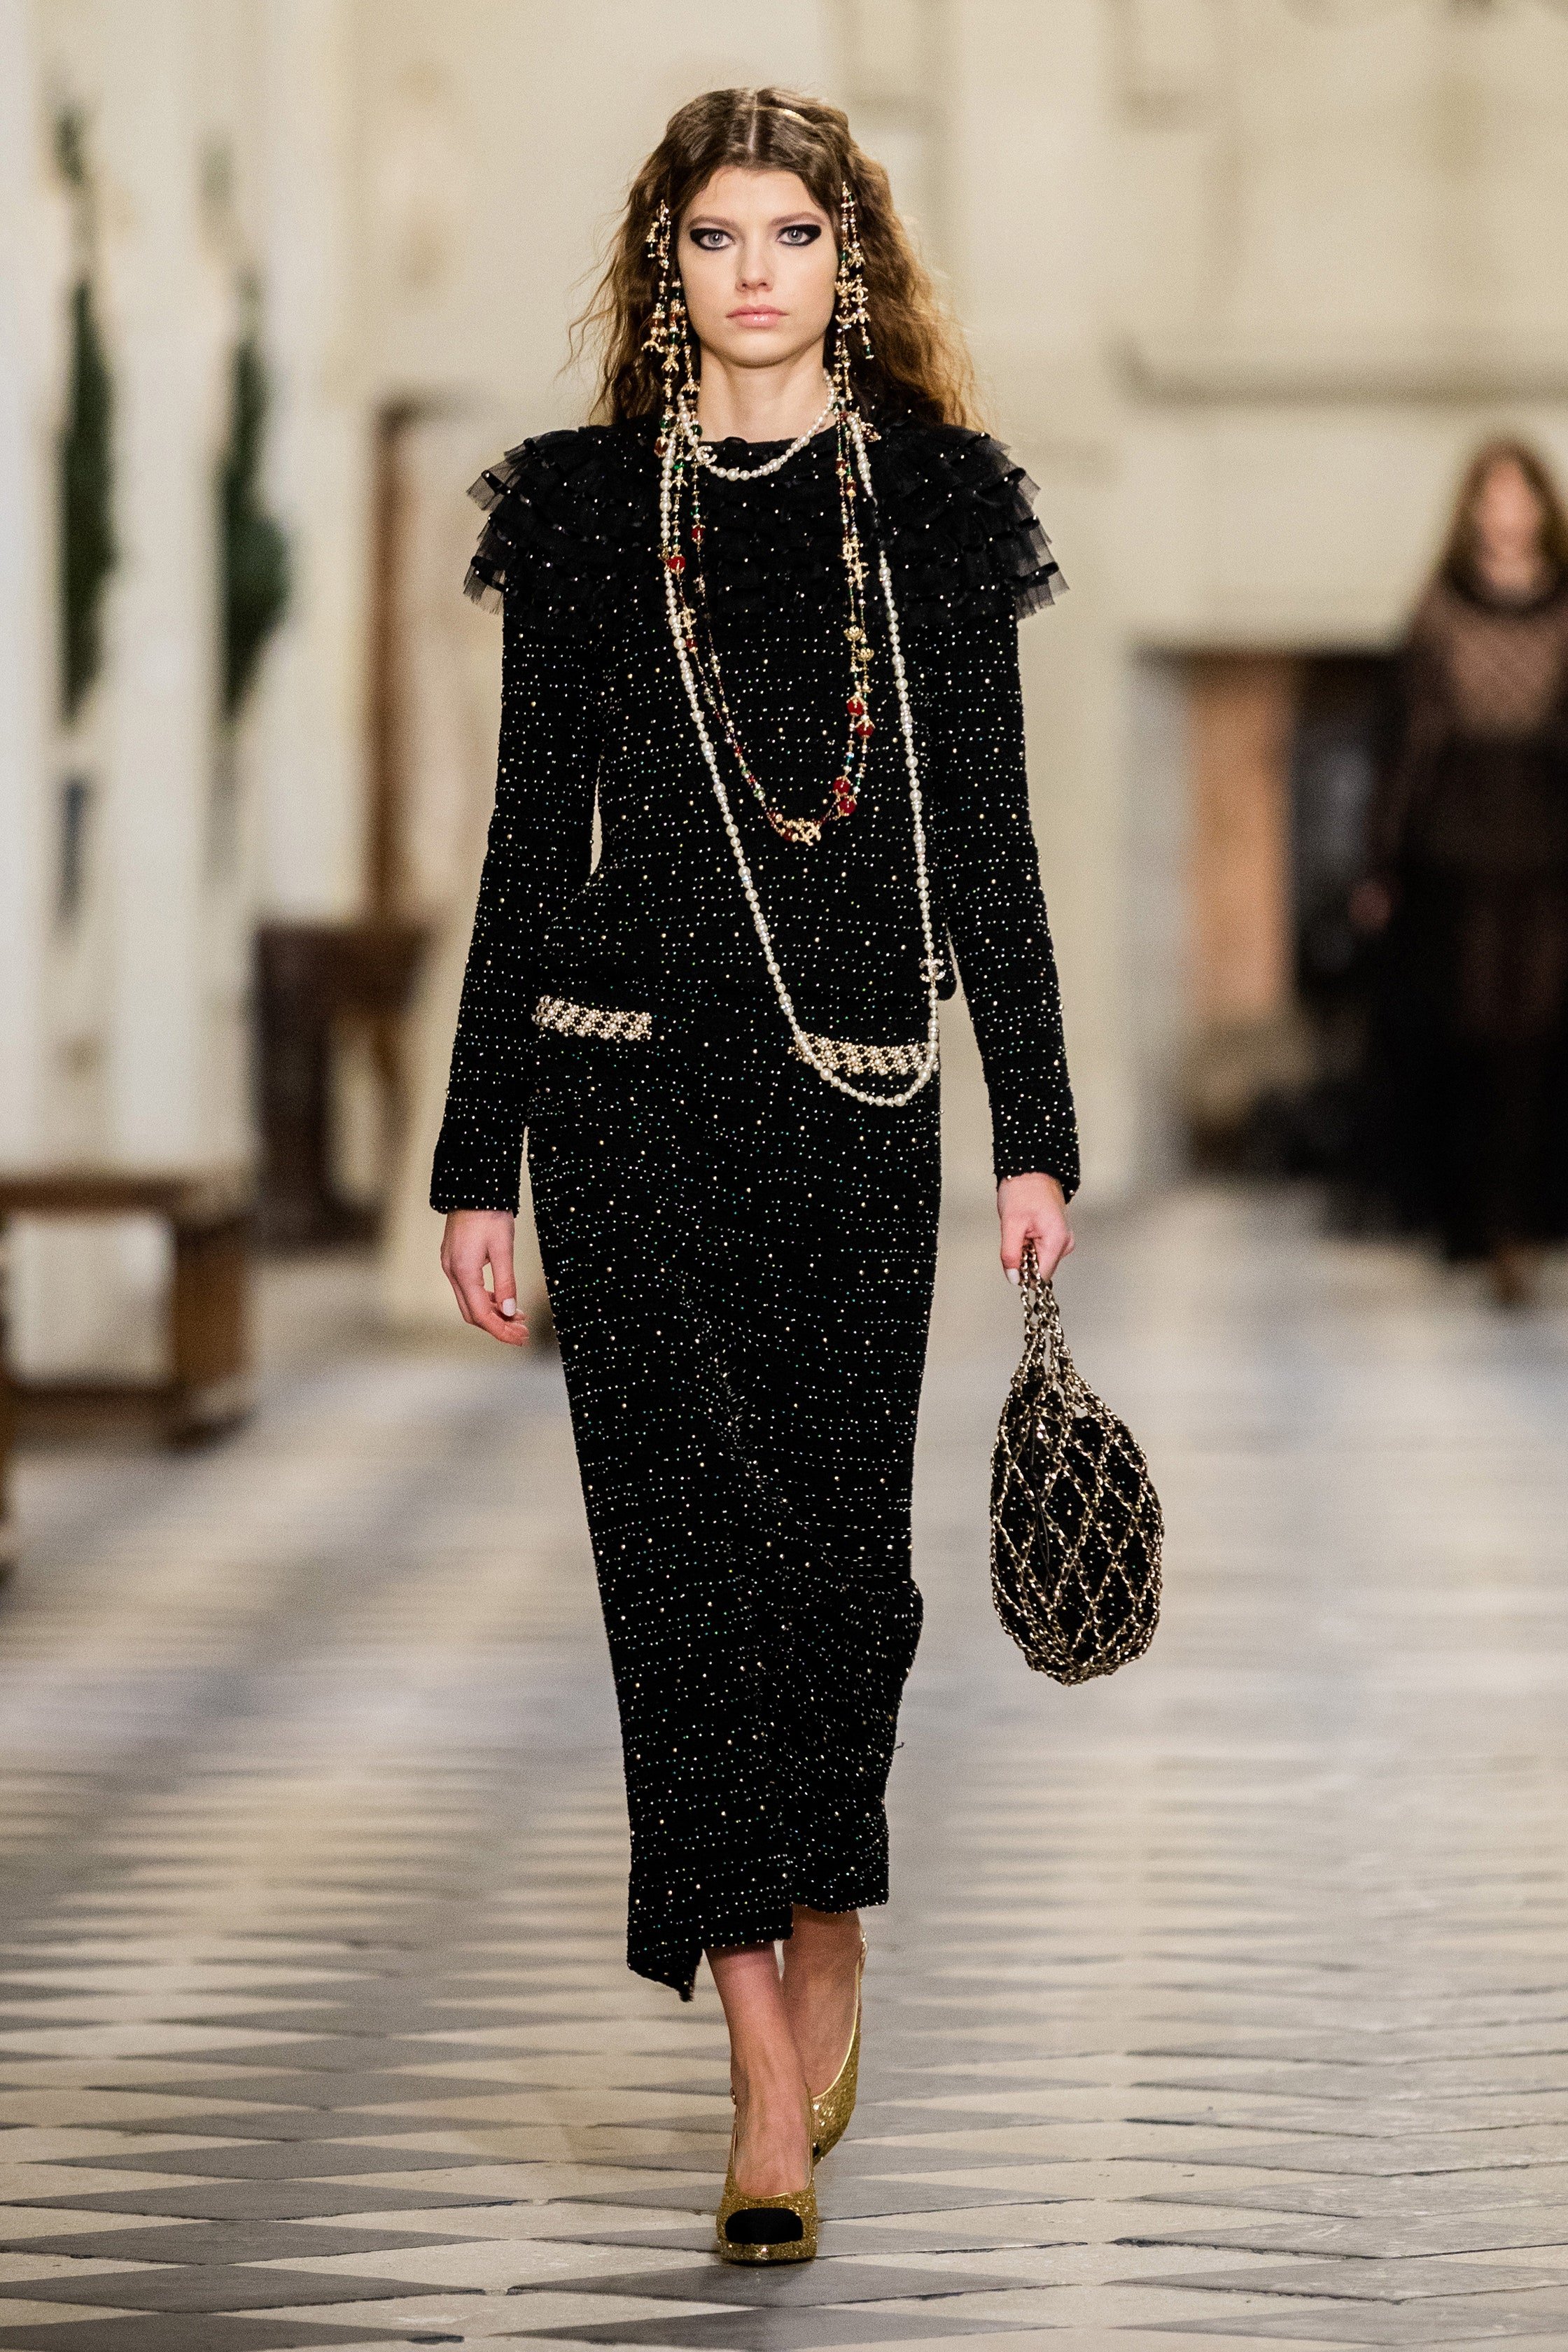 McGinn Charlotte tweed dress #Chanel on a budget